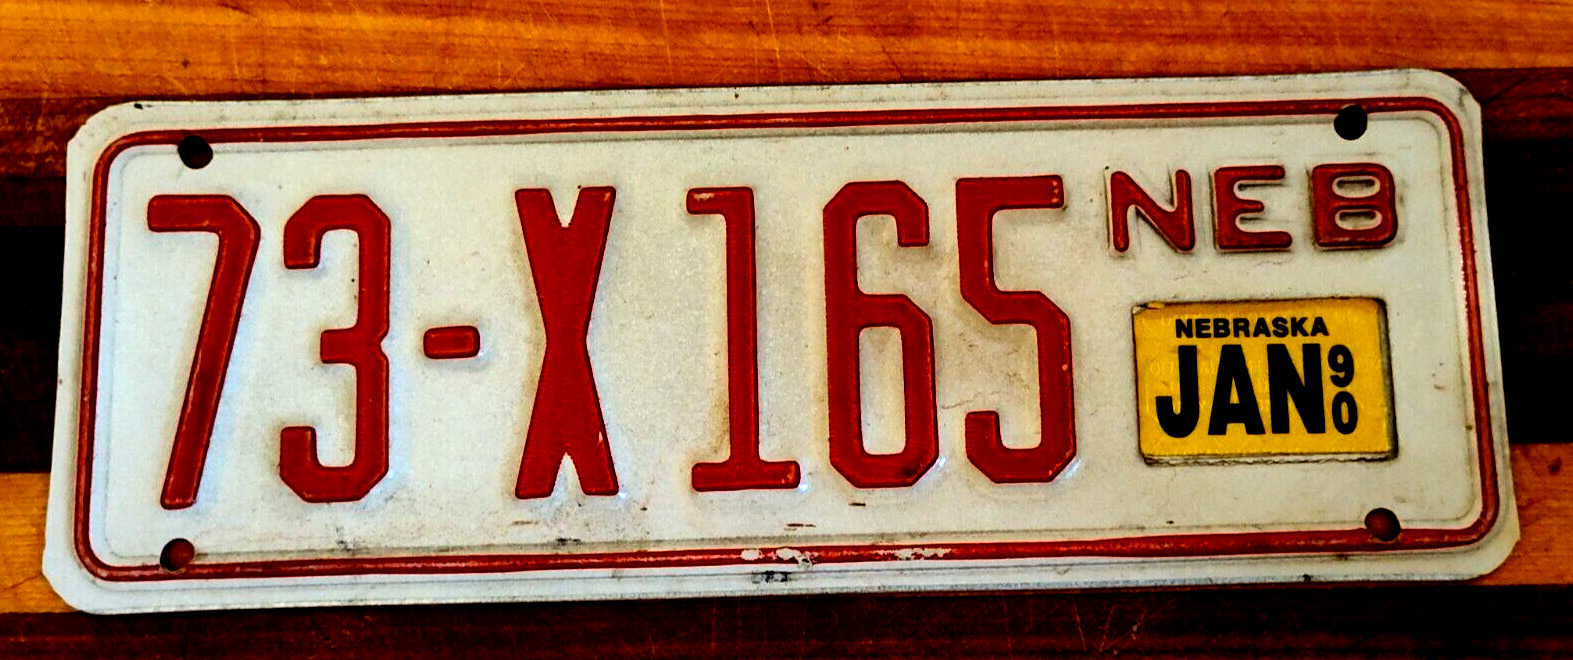 1990 Nebraska Trailer Red on White Metal Expired License Plate Tag 73-X 165